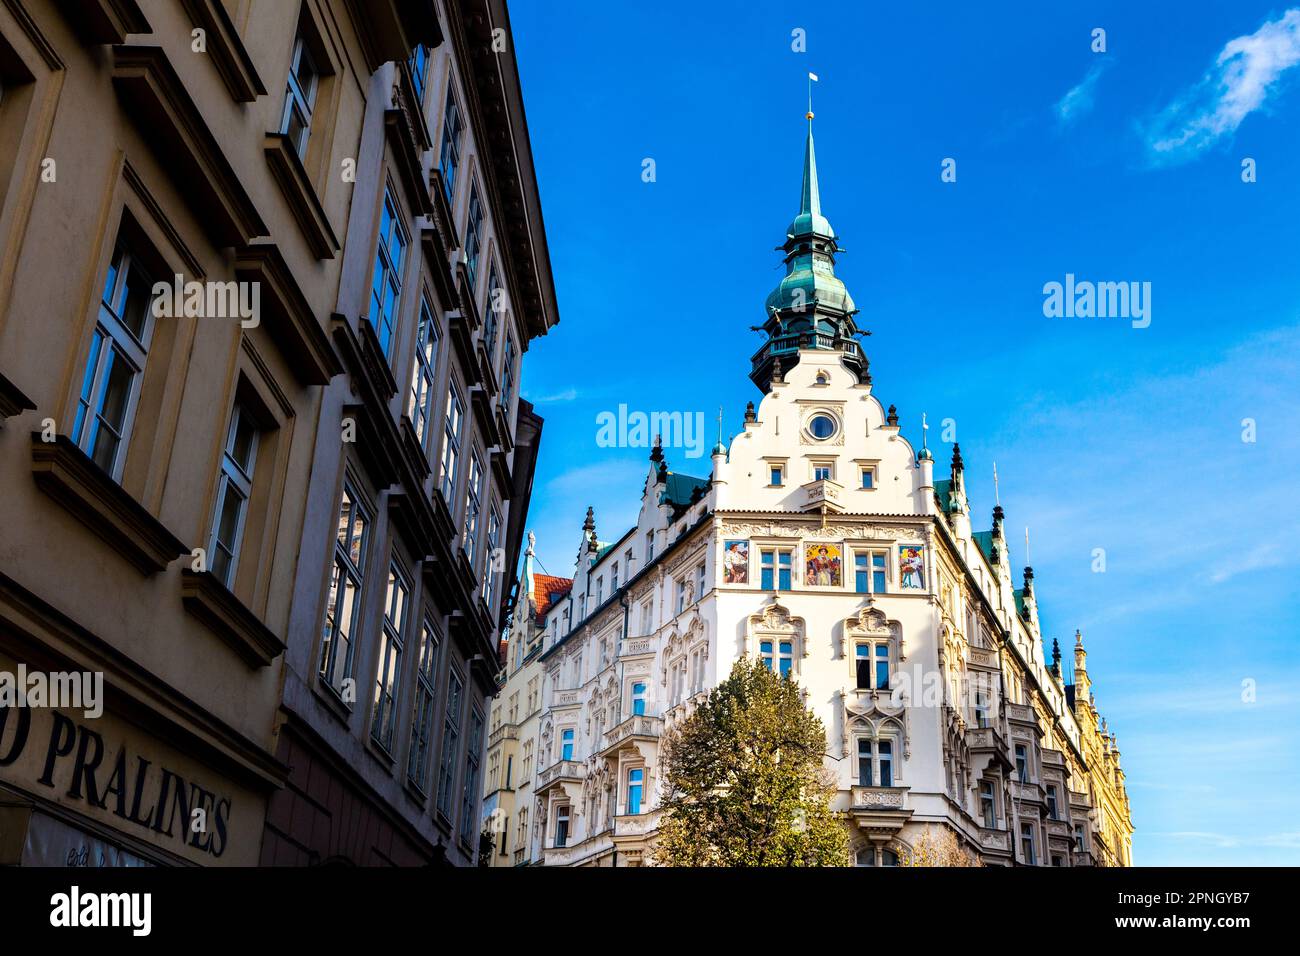 Ornate exterior of Hotel Paris Prague on Králodvorská street, Old Town, Prague, Czech Republic Stock Photo